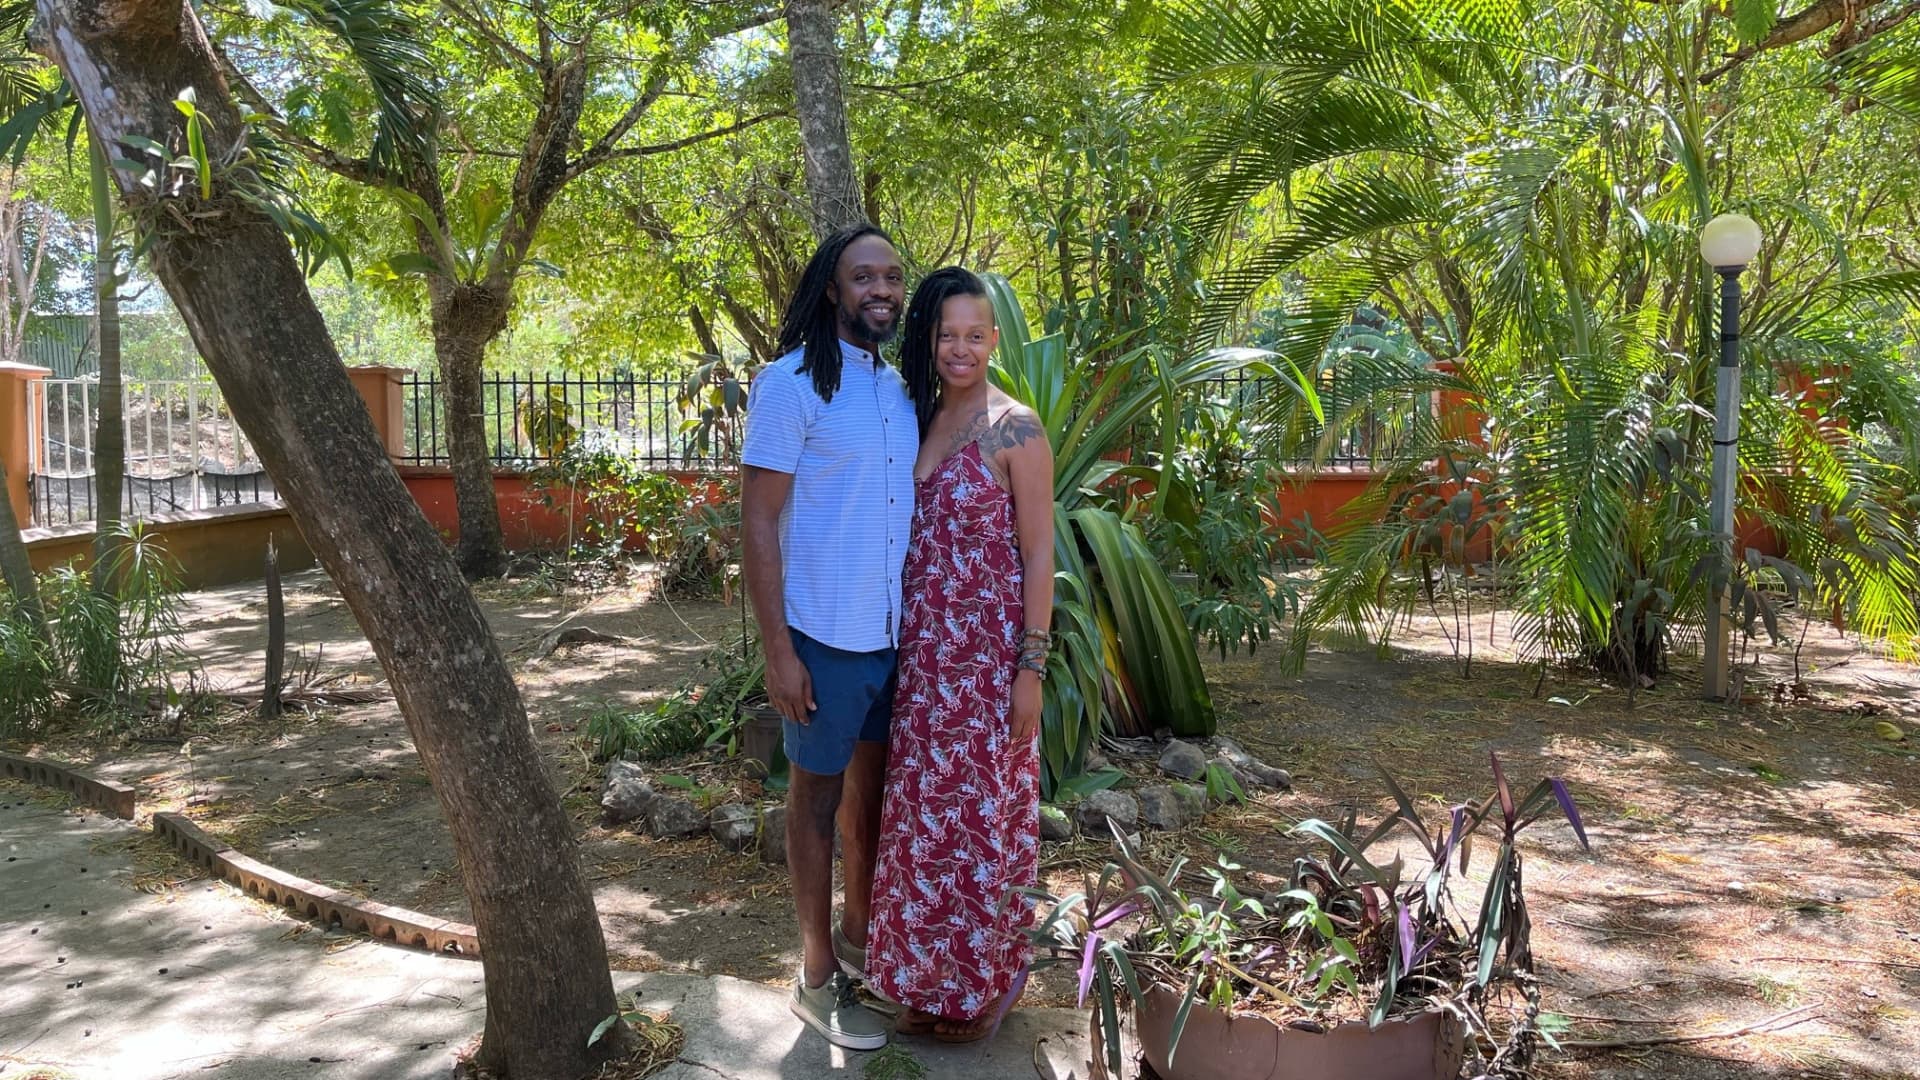 I left the U.S. and moved to Costa Rica-now I'm 'a lot happier'